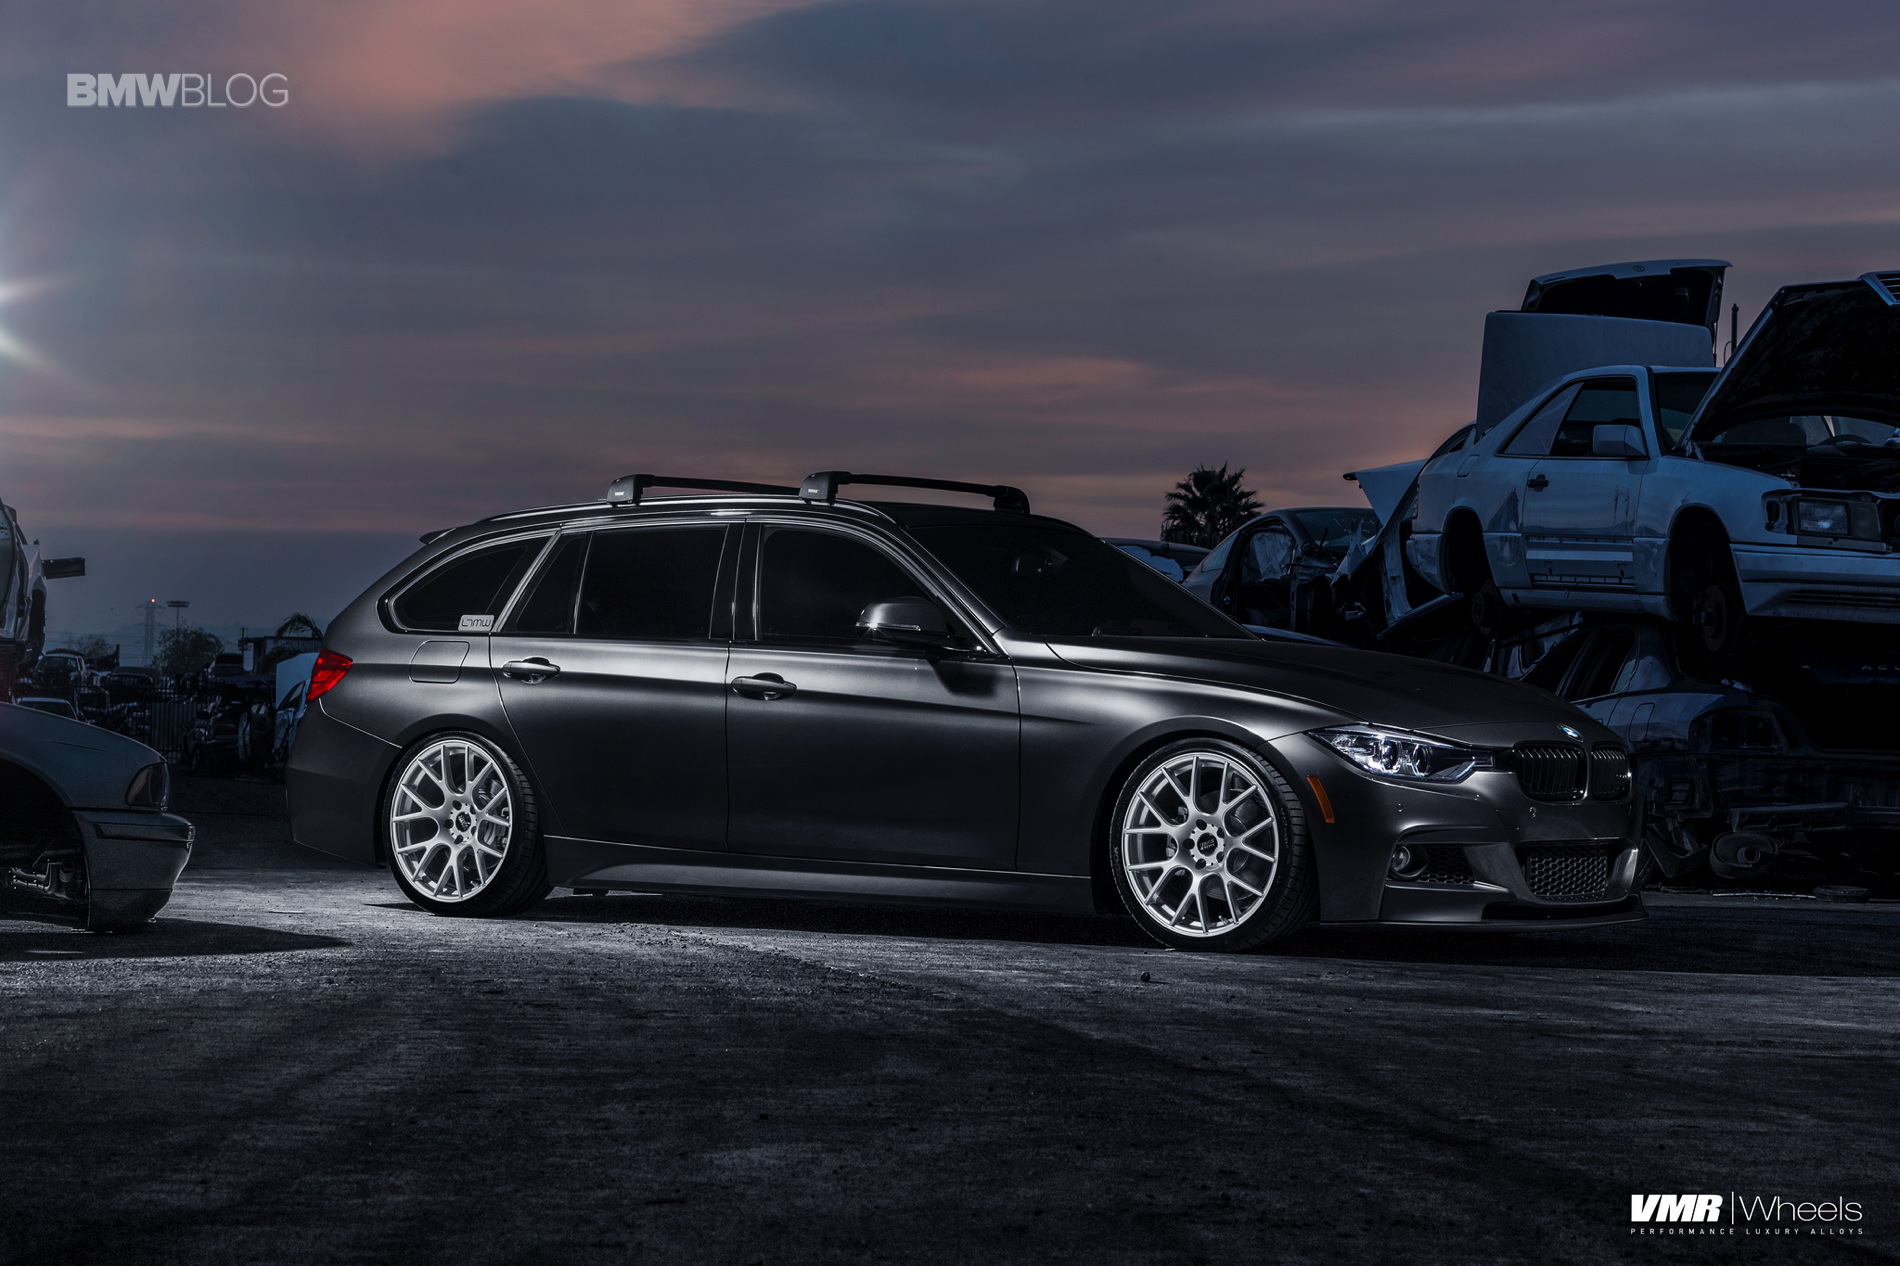 BMW F31 Sports Wagon gets some visual upgrades and custom wheels